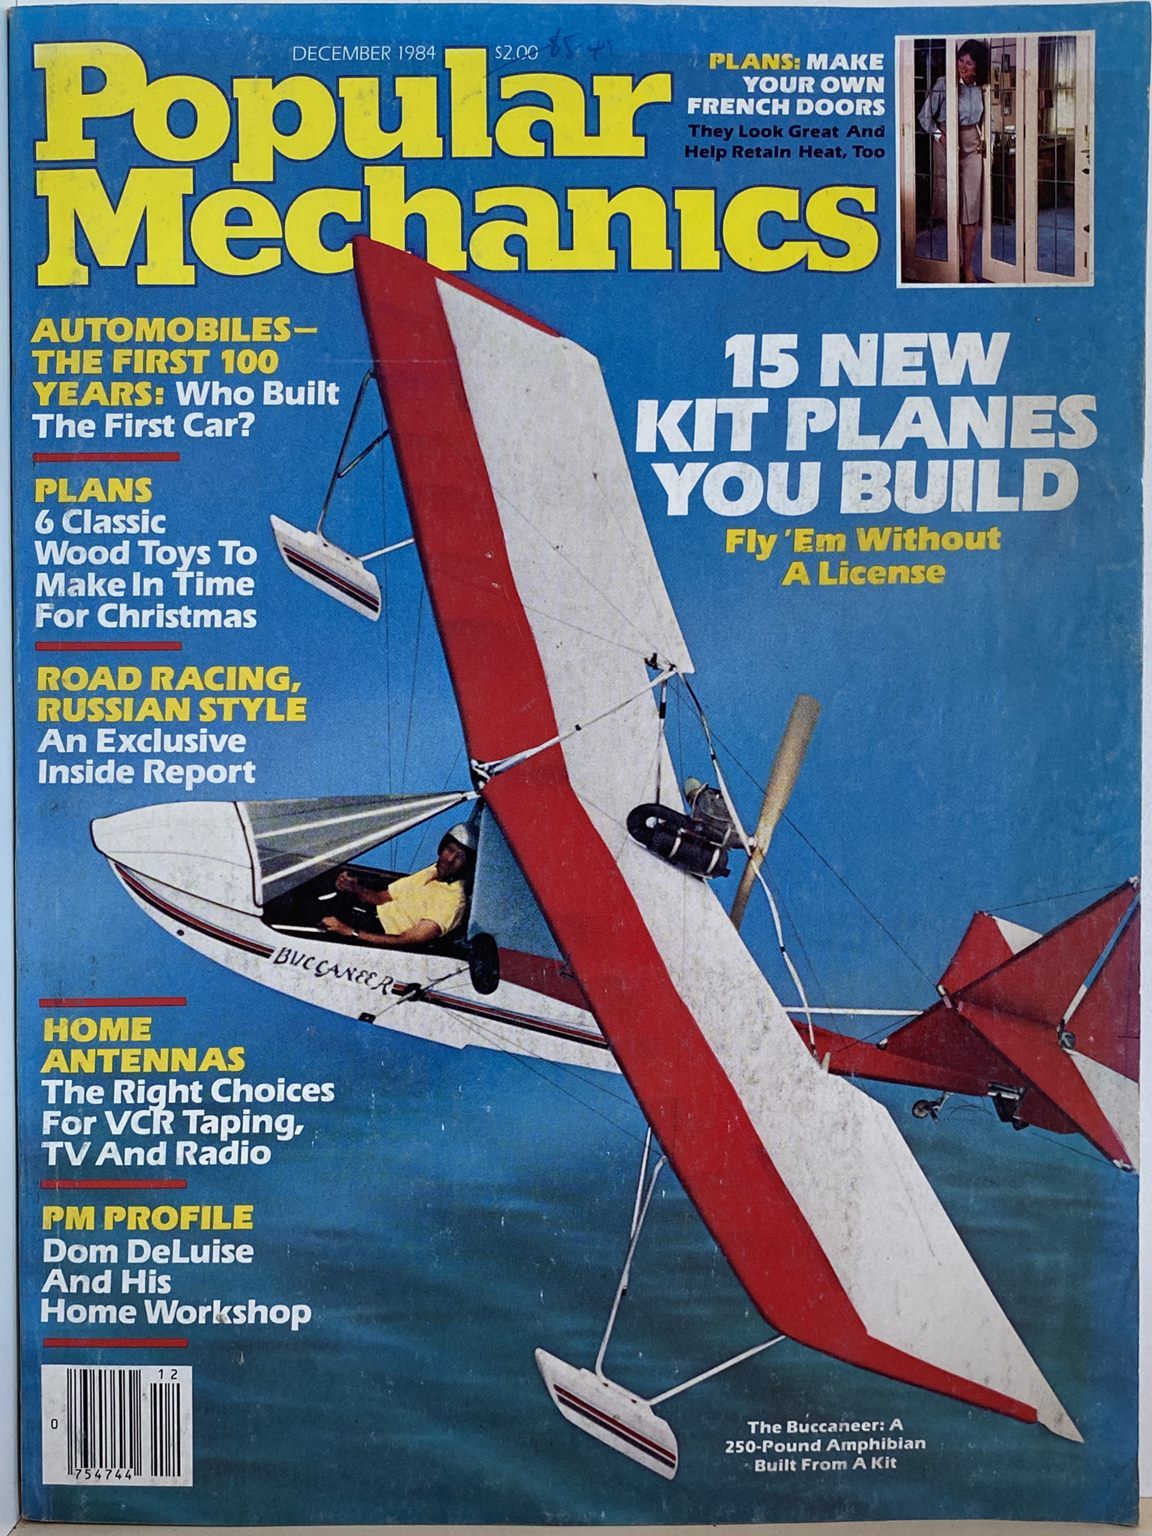 VINTAGE MAGAZINE: Popular Mechanics - Vol. 161, No. 12 - December 1984